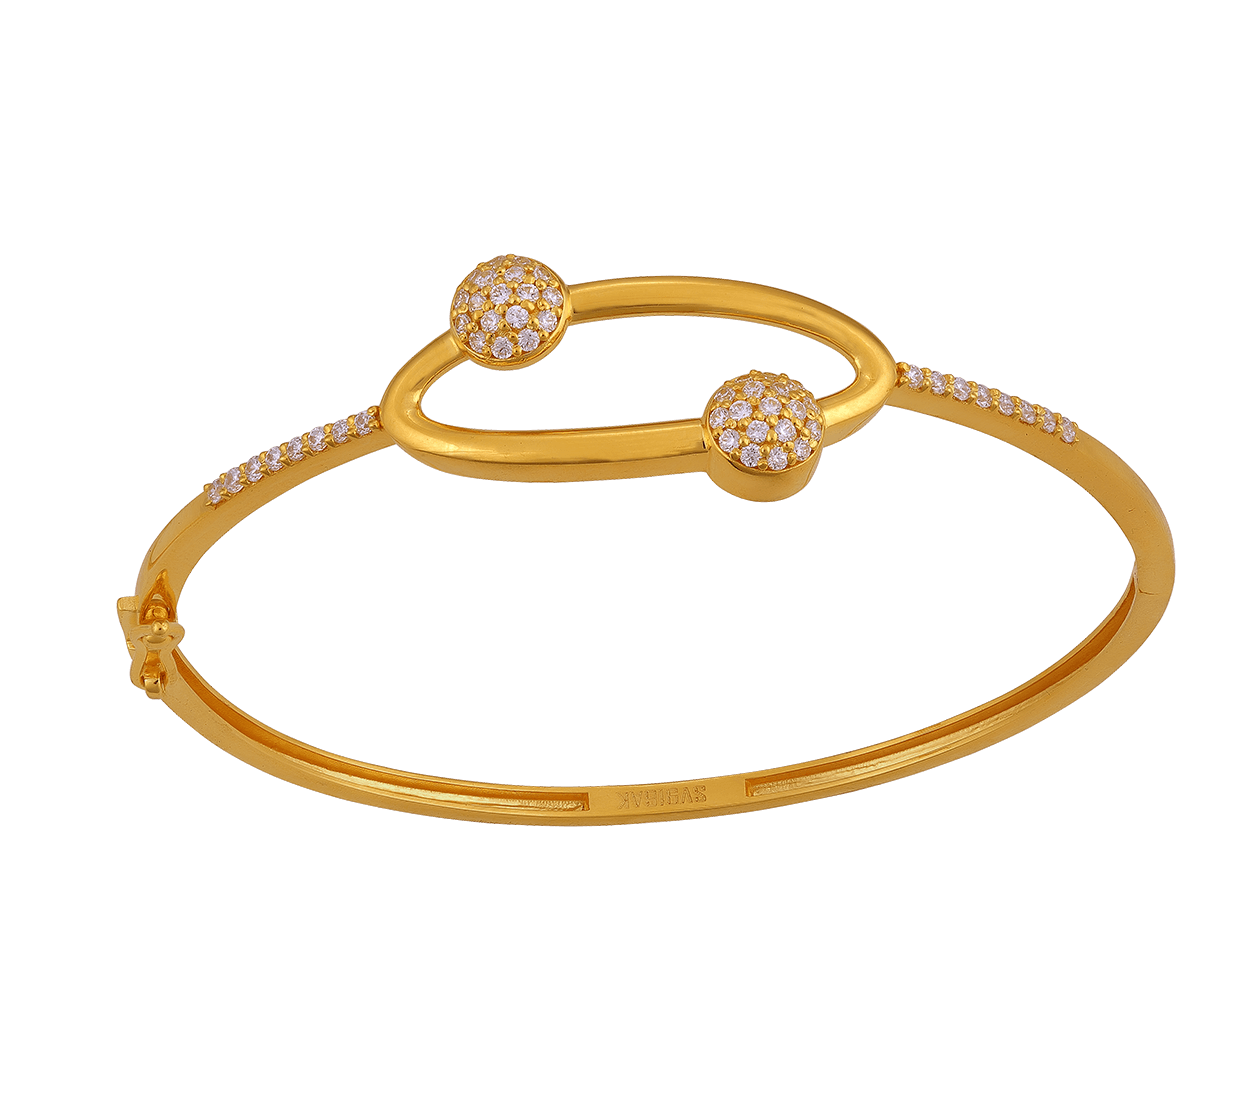 Bangle Real 18k Yellow Gold Filled Solid Ladies Twist Cuff Bracelet Design  | eBay